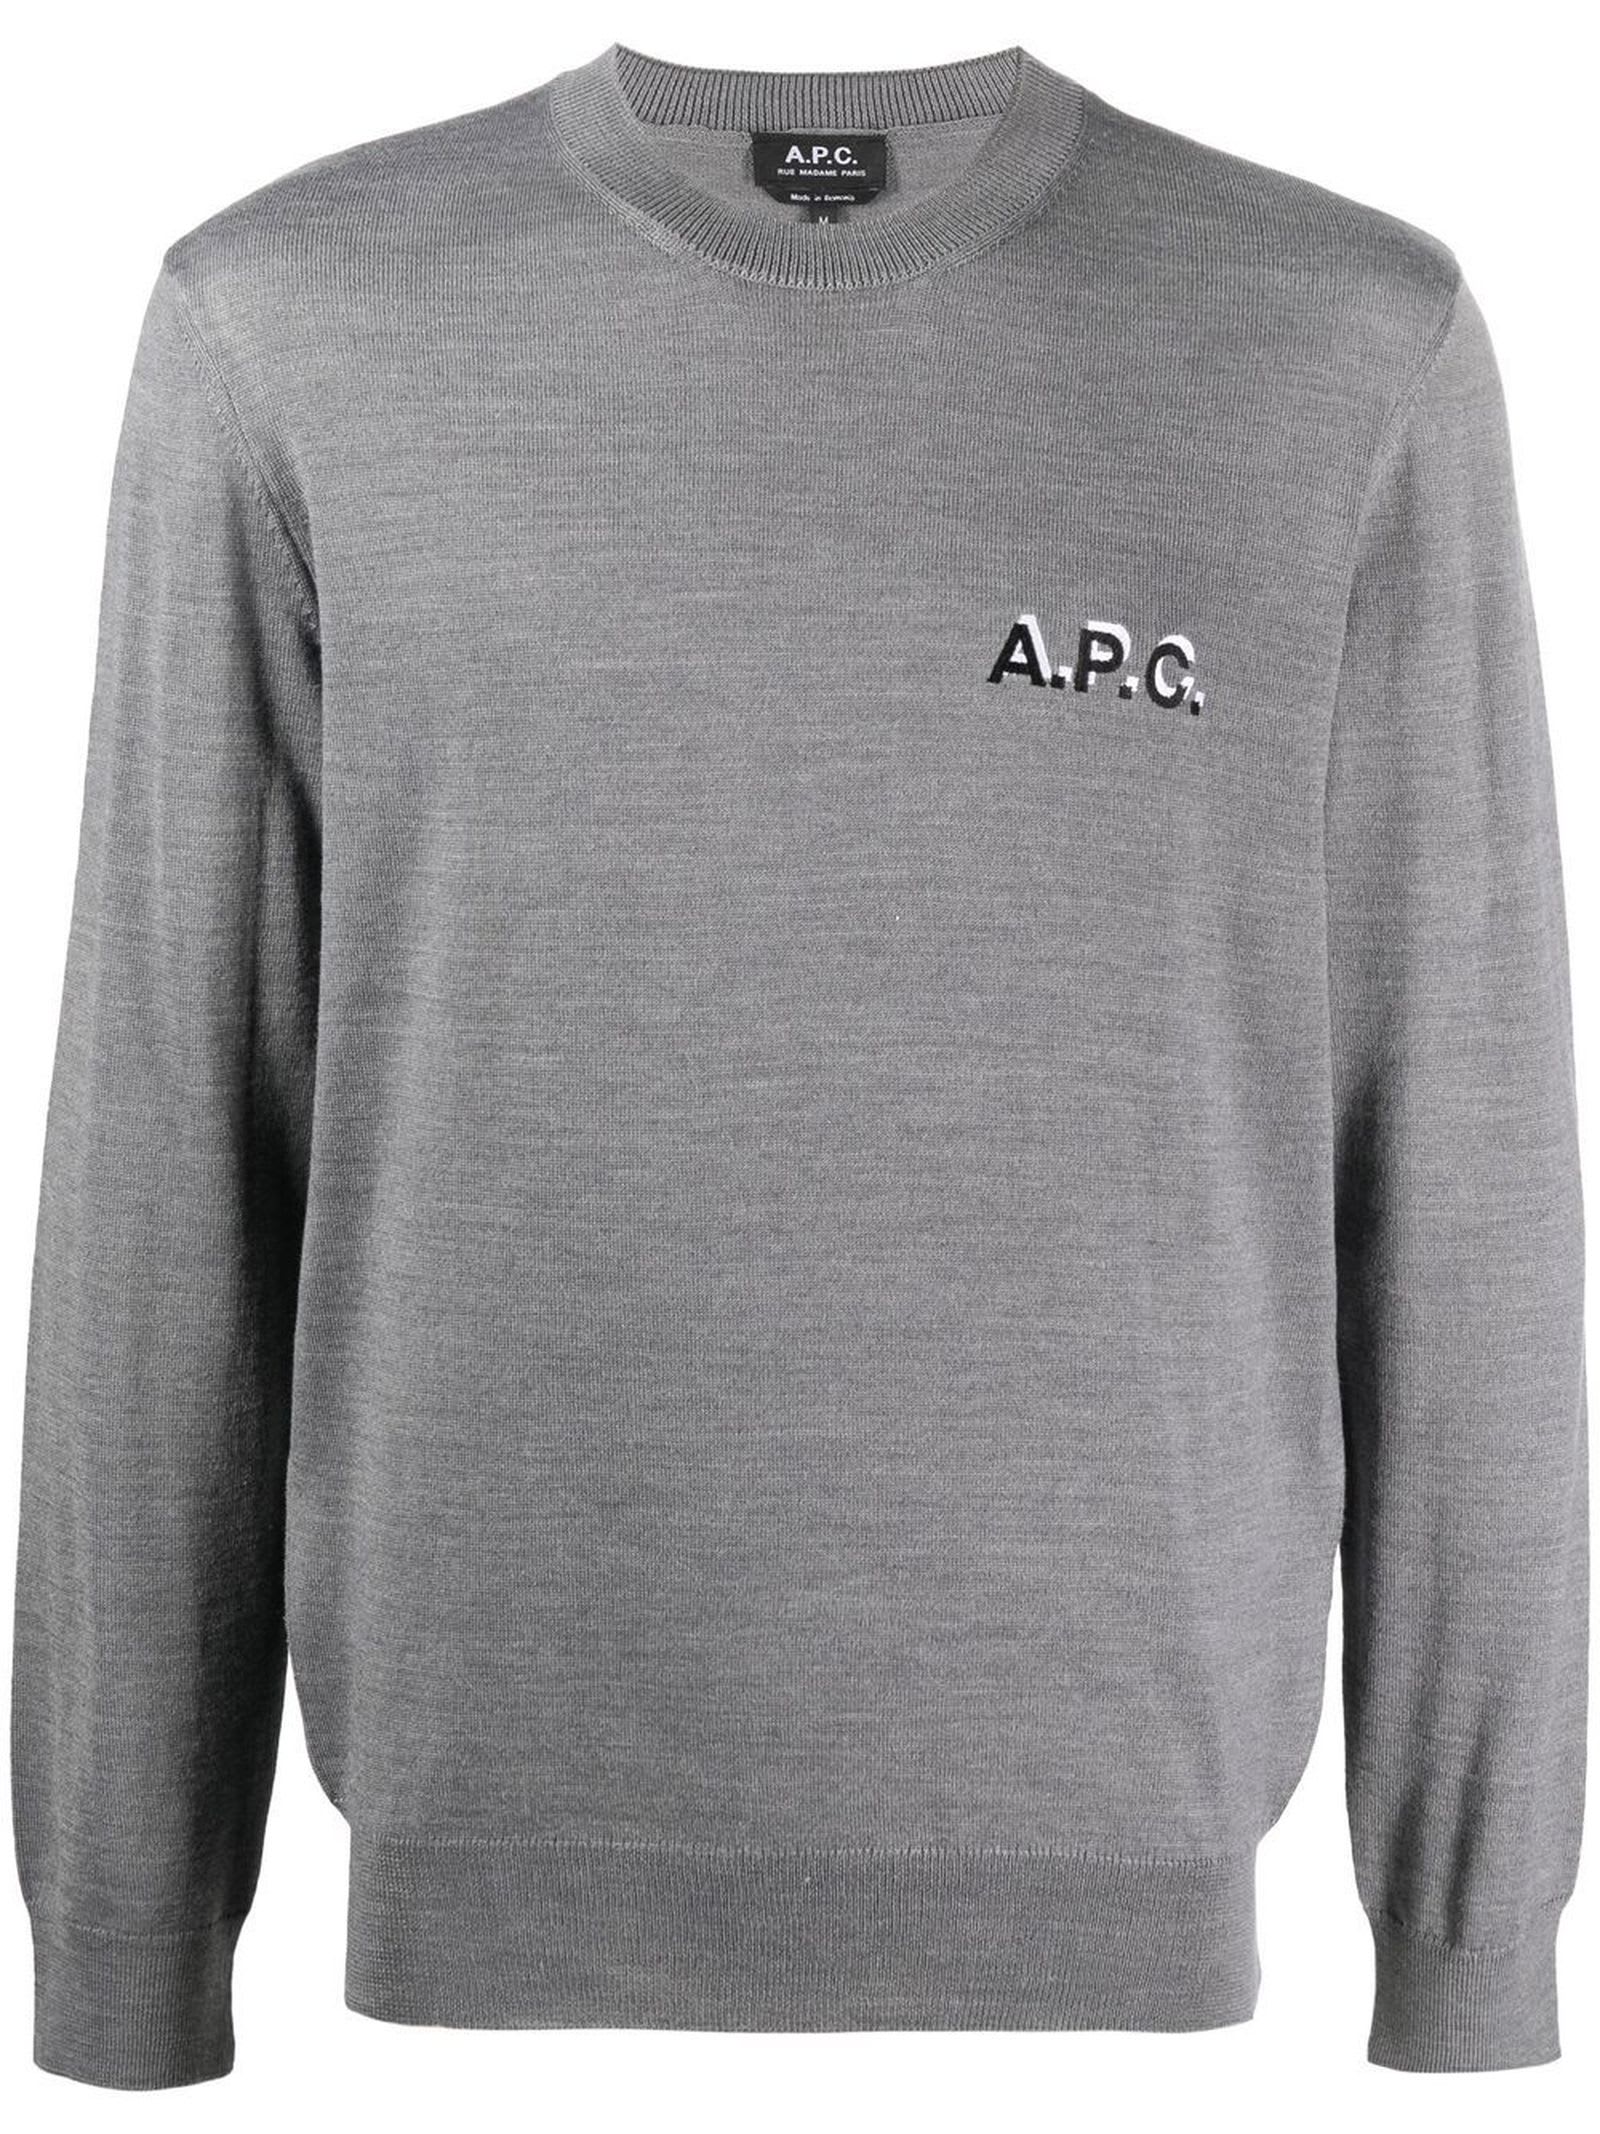 A.P.C. Grey Wool Blend Sweater